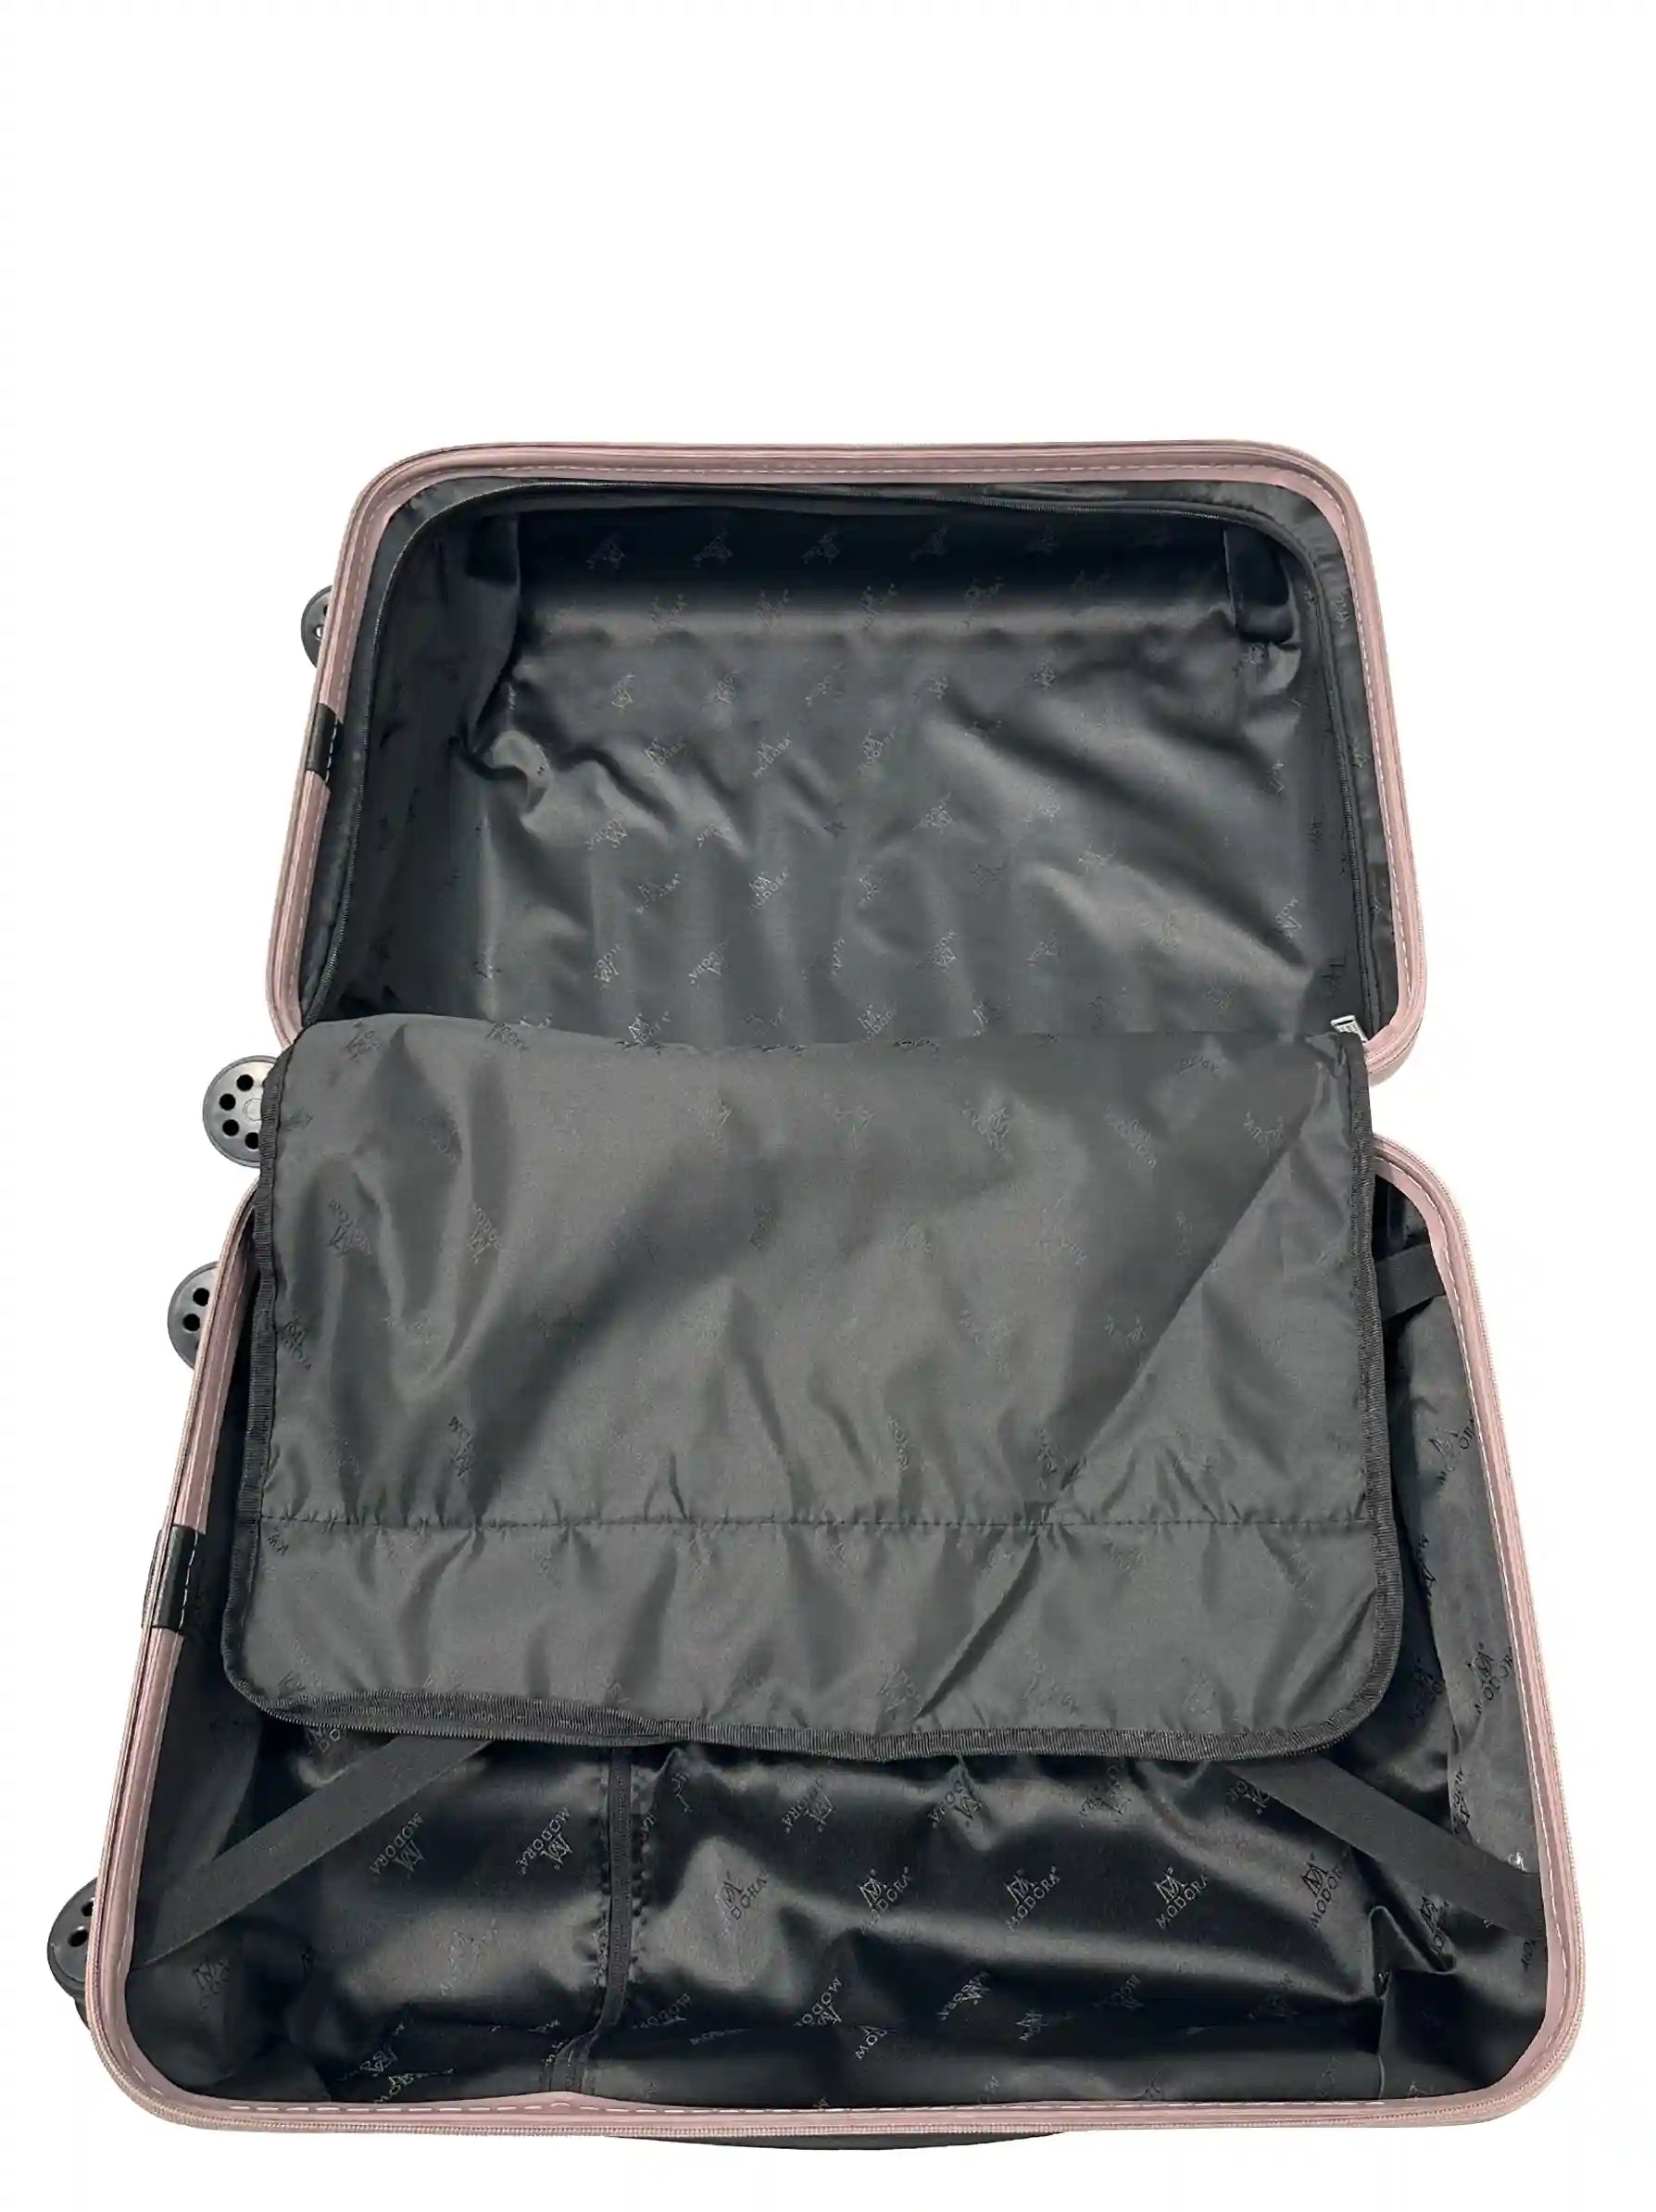 Powder medium suitcase uk